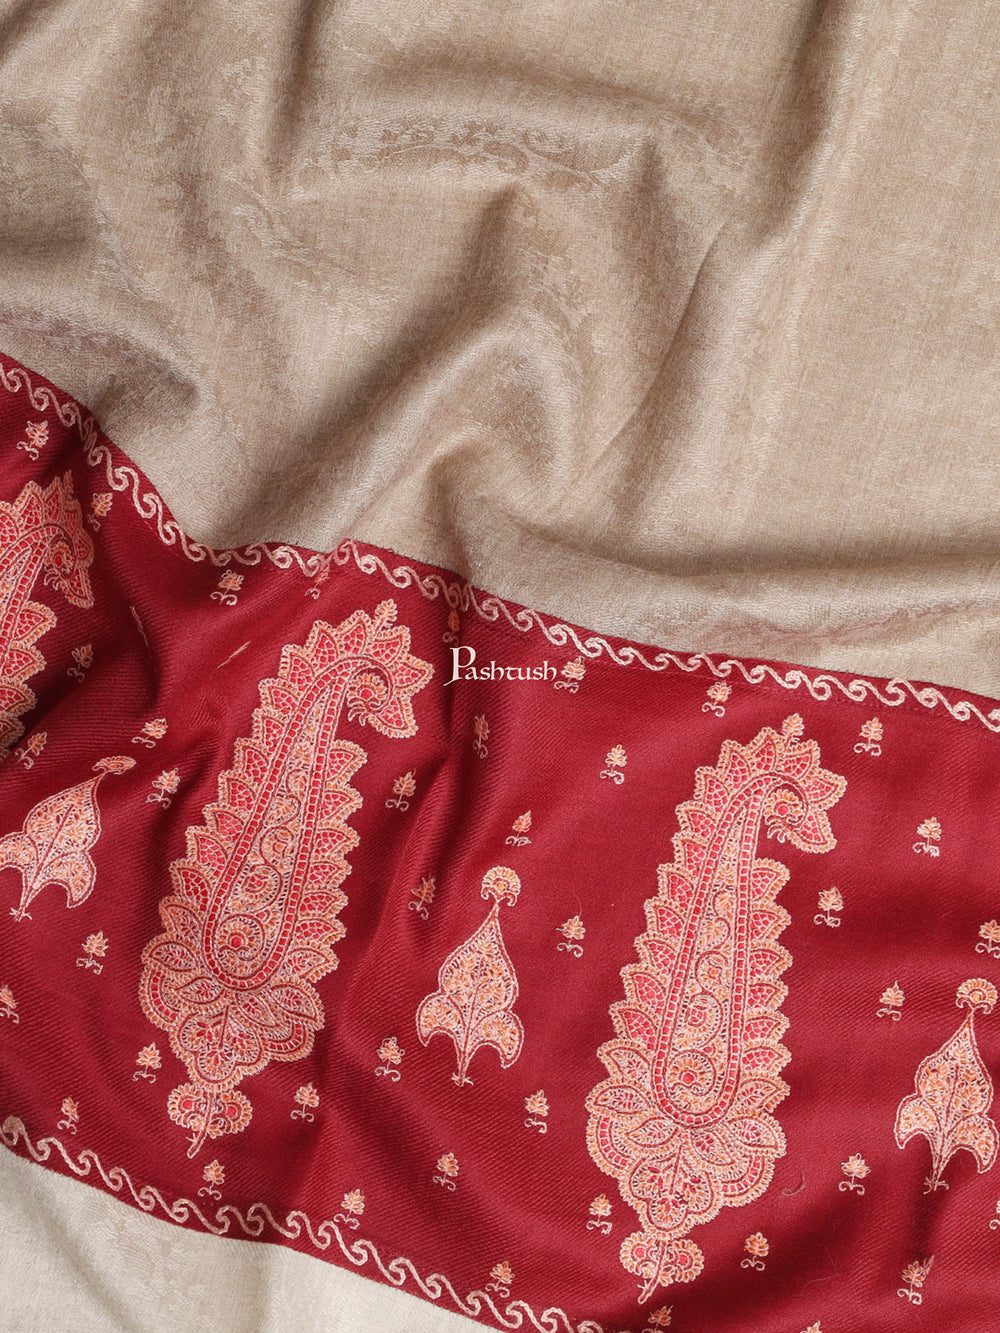 Pashtush India Womens Shawls Pashtush Womens Embroidery Shawl, Paiseley Stitched Palla, Beige and Maroon